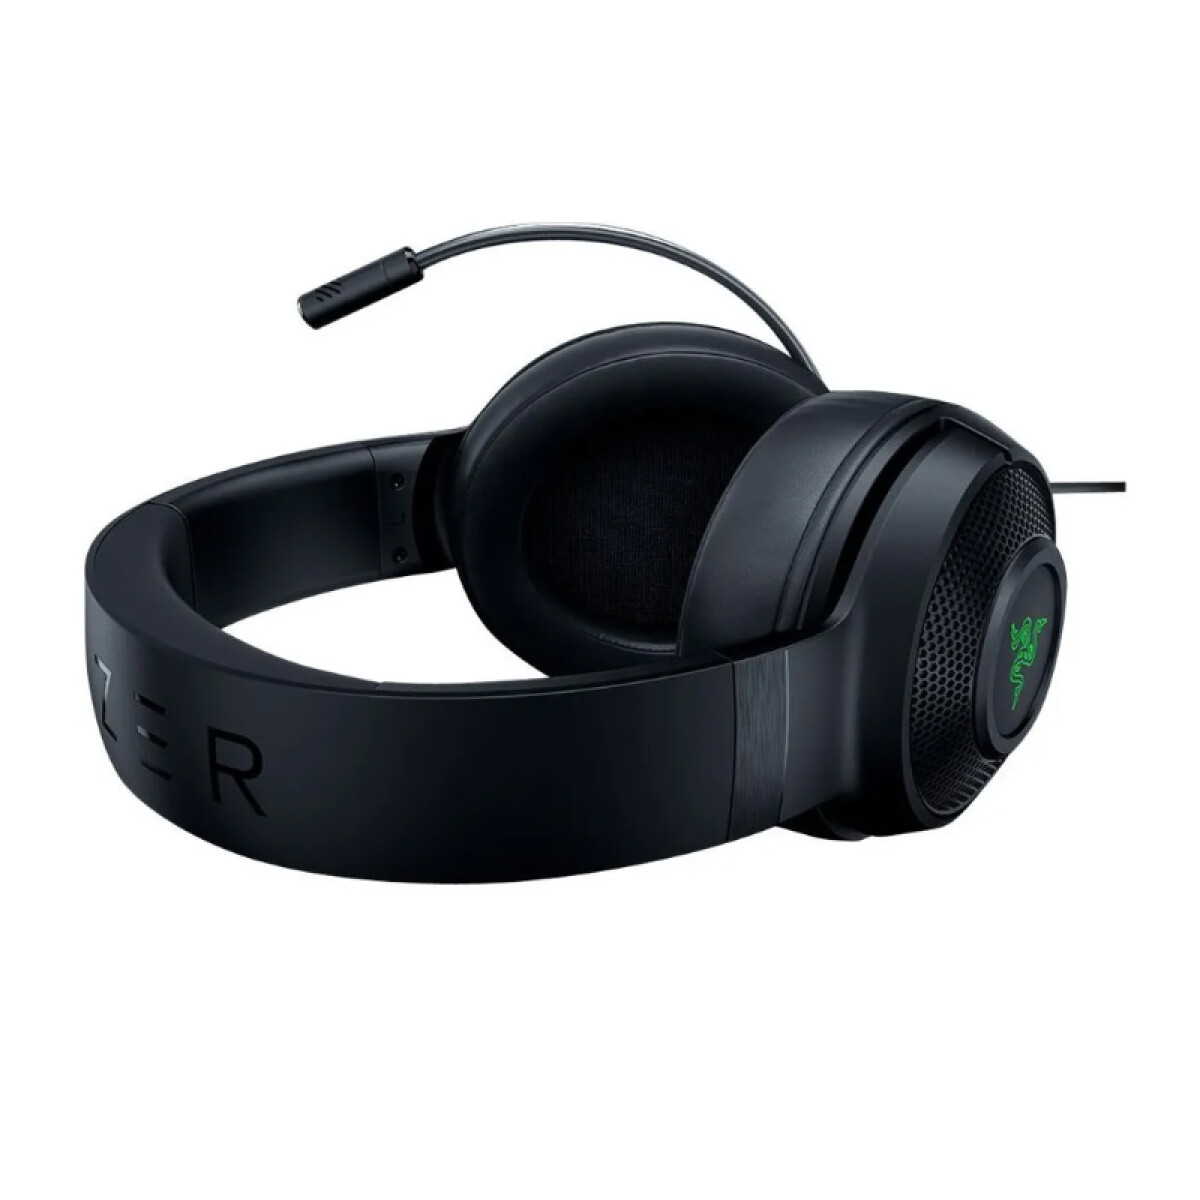 Razer kraken x for console multi-platform wired gaming headset Negro